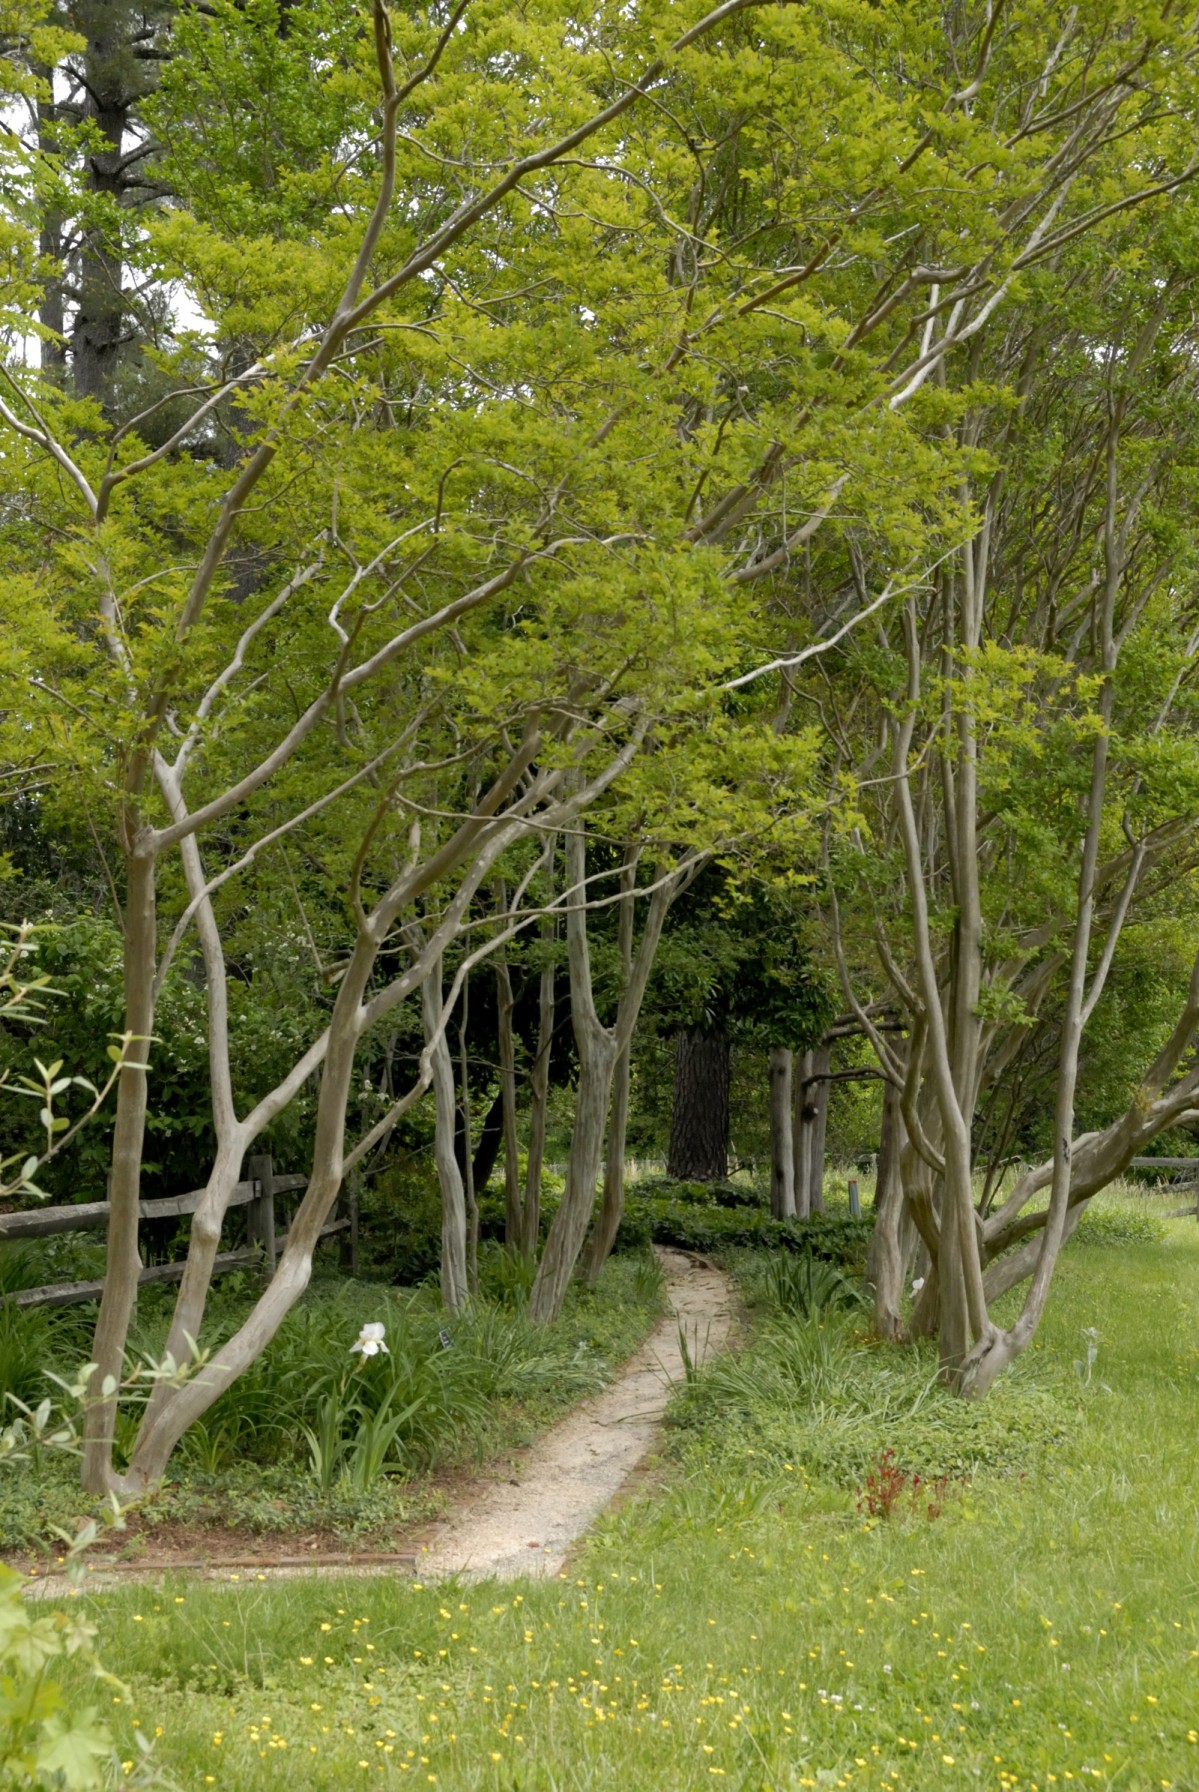 Trees flanks a narrow path through the grass